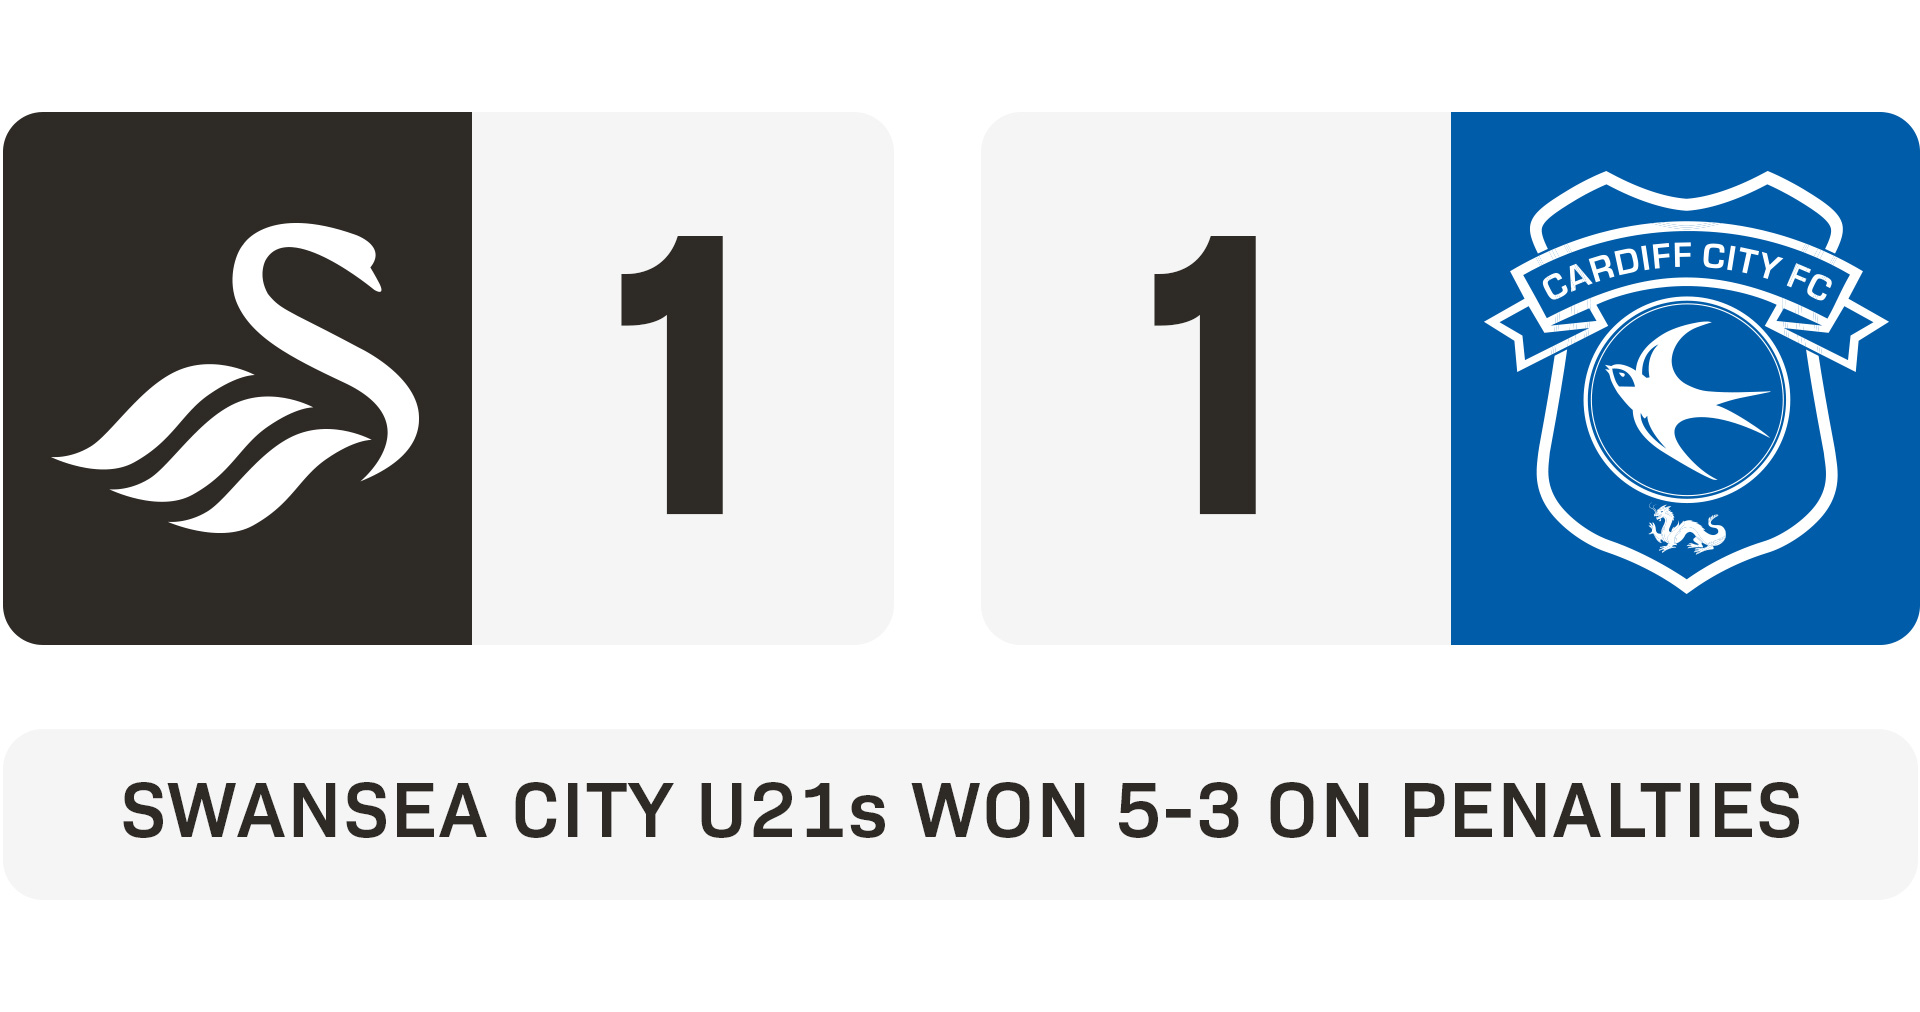 Match Report, Swans U21s 2 - Cardiff City U21s 2, Swans won 5-4 on penalties